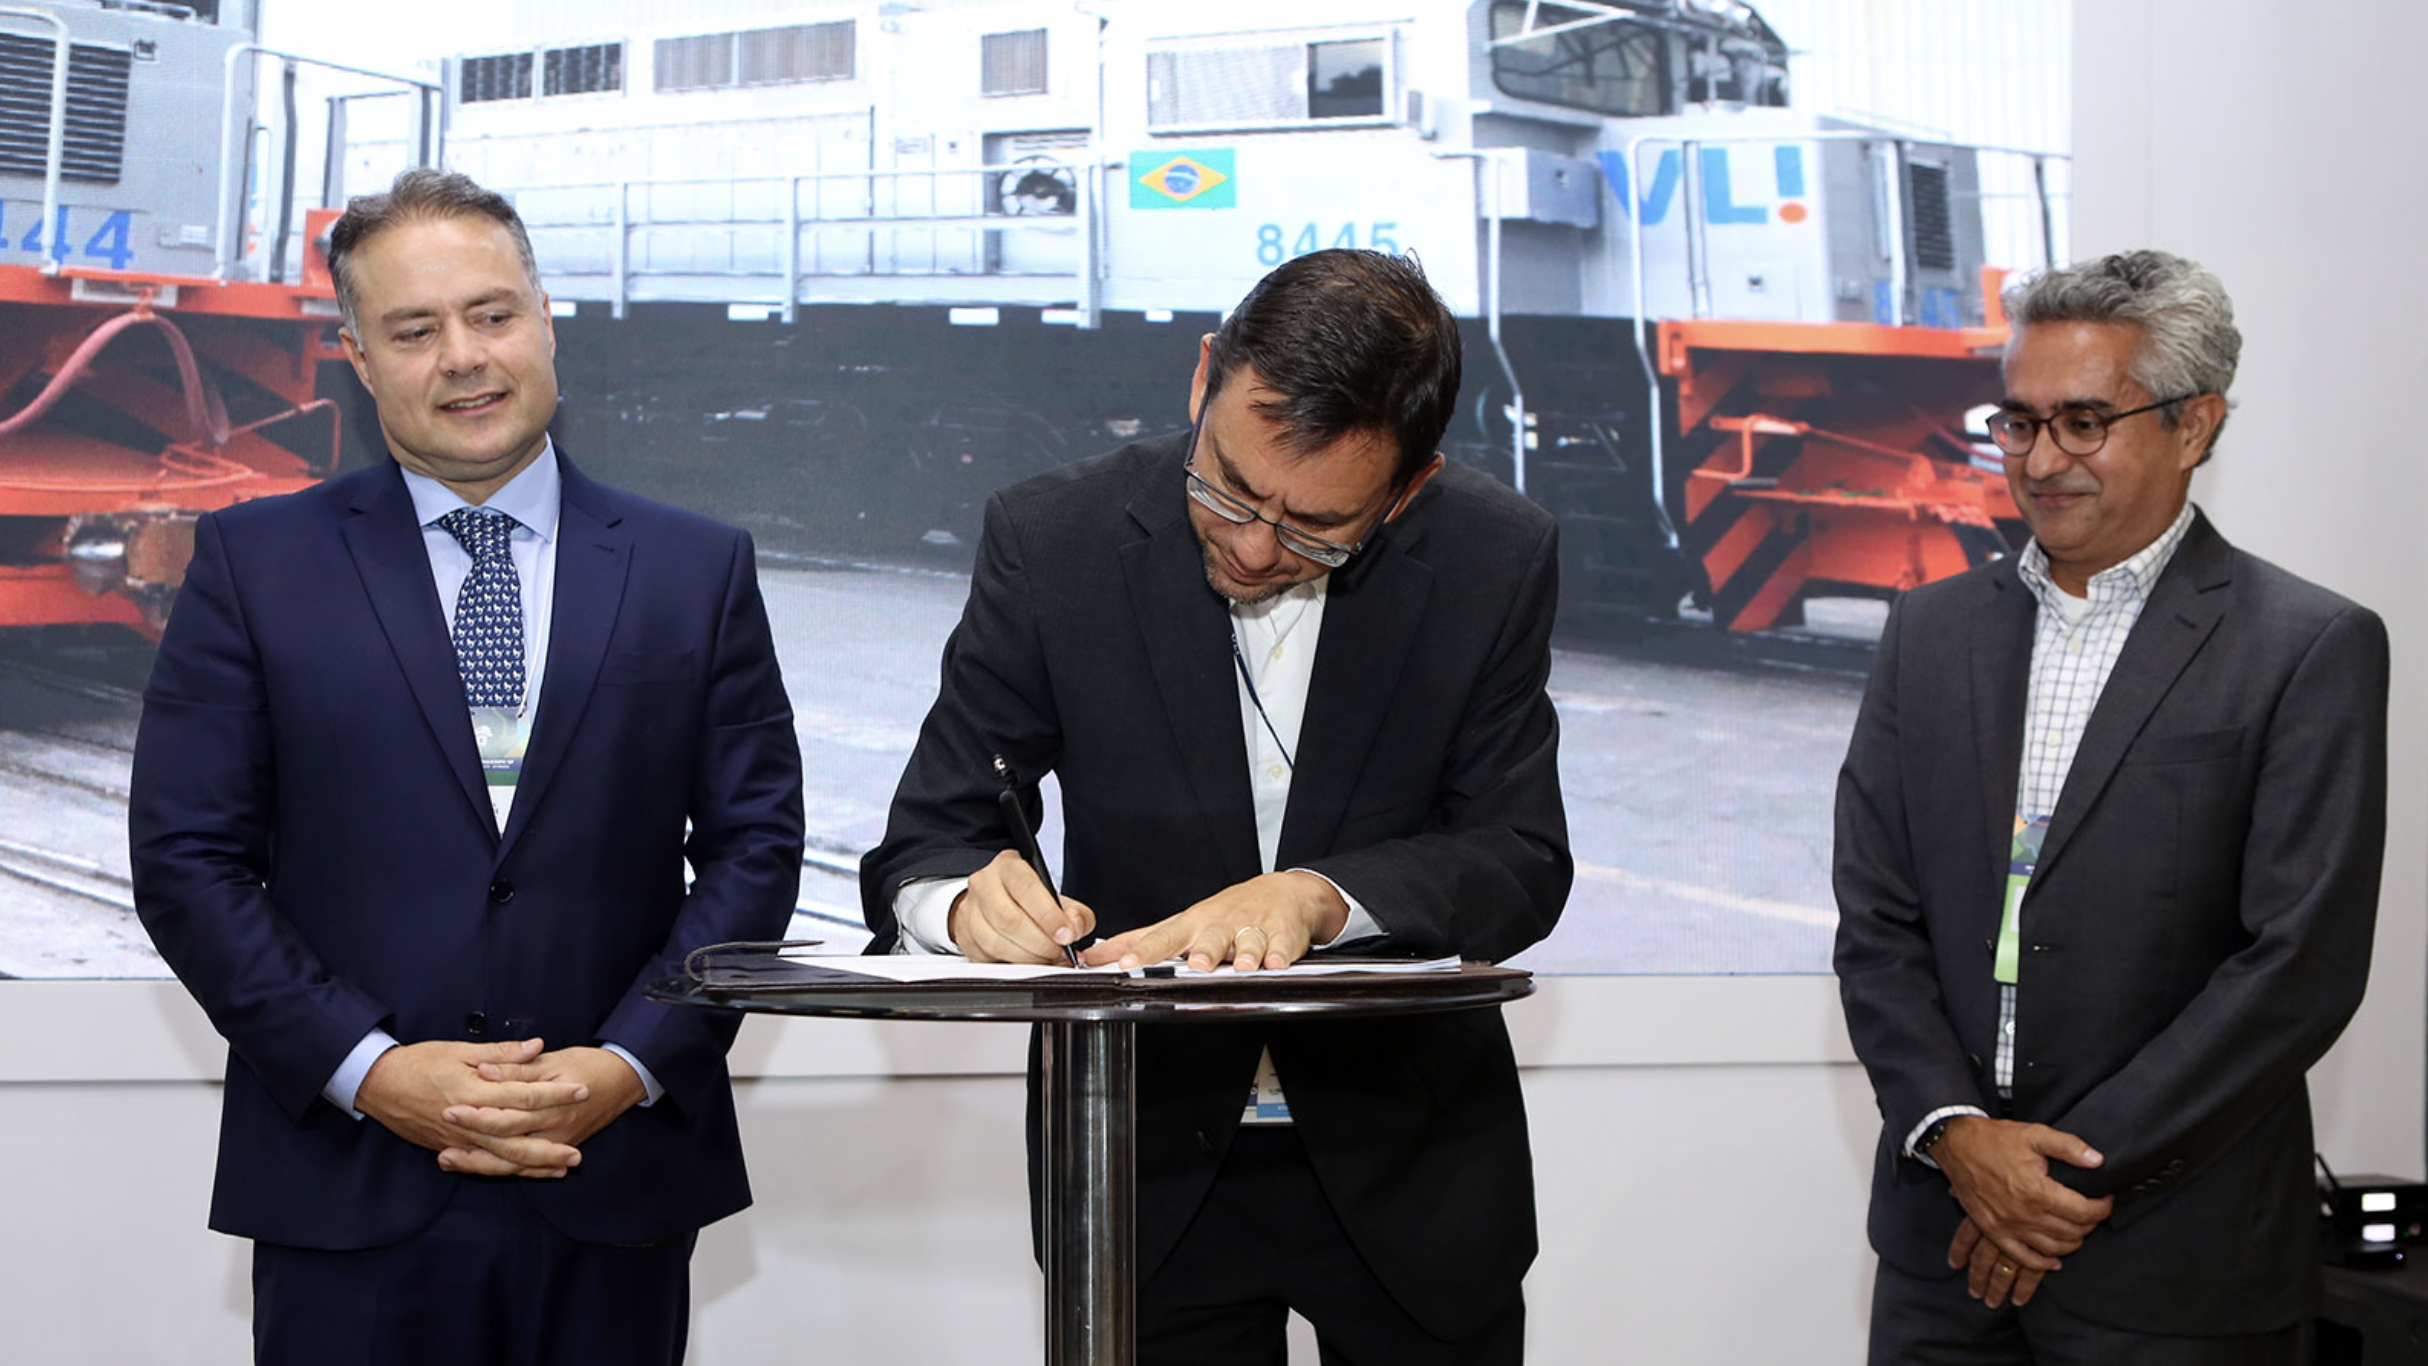 From left to right: Renan Filho, Brazil Minister of Transport; Fabio Marchiori, CFO and interim CEO of VLI; and Danilo Miyasato, President and Leader of Wabtec Latin America Region. (Photograph Courtesy of Wabtec)